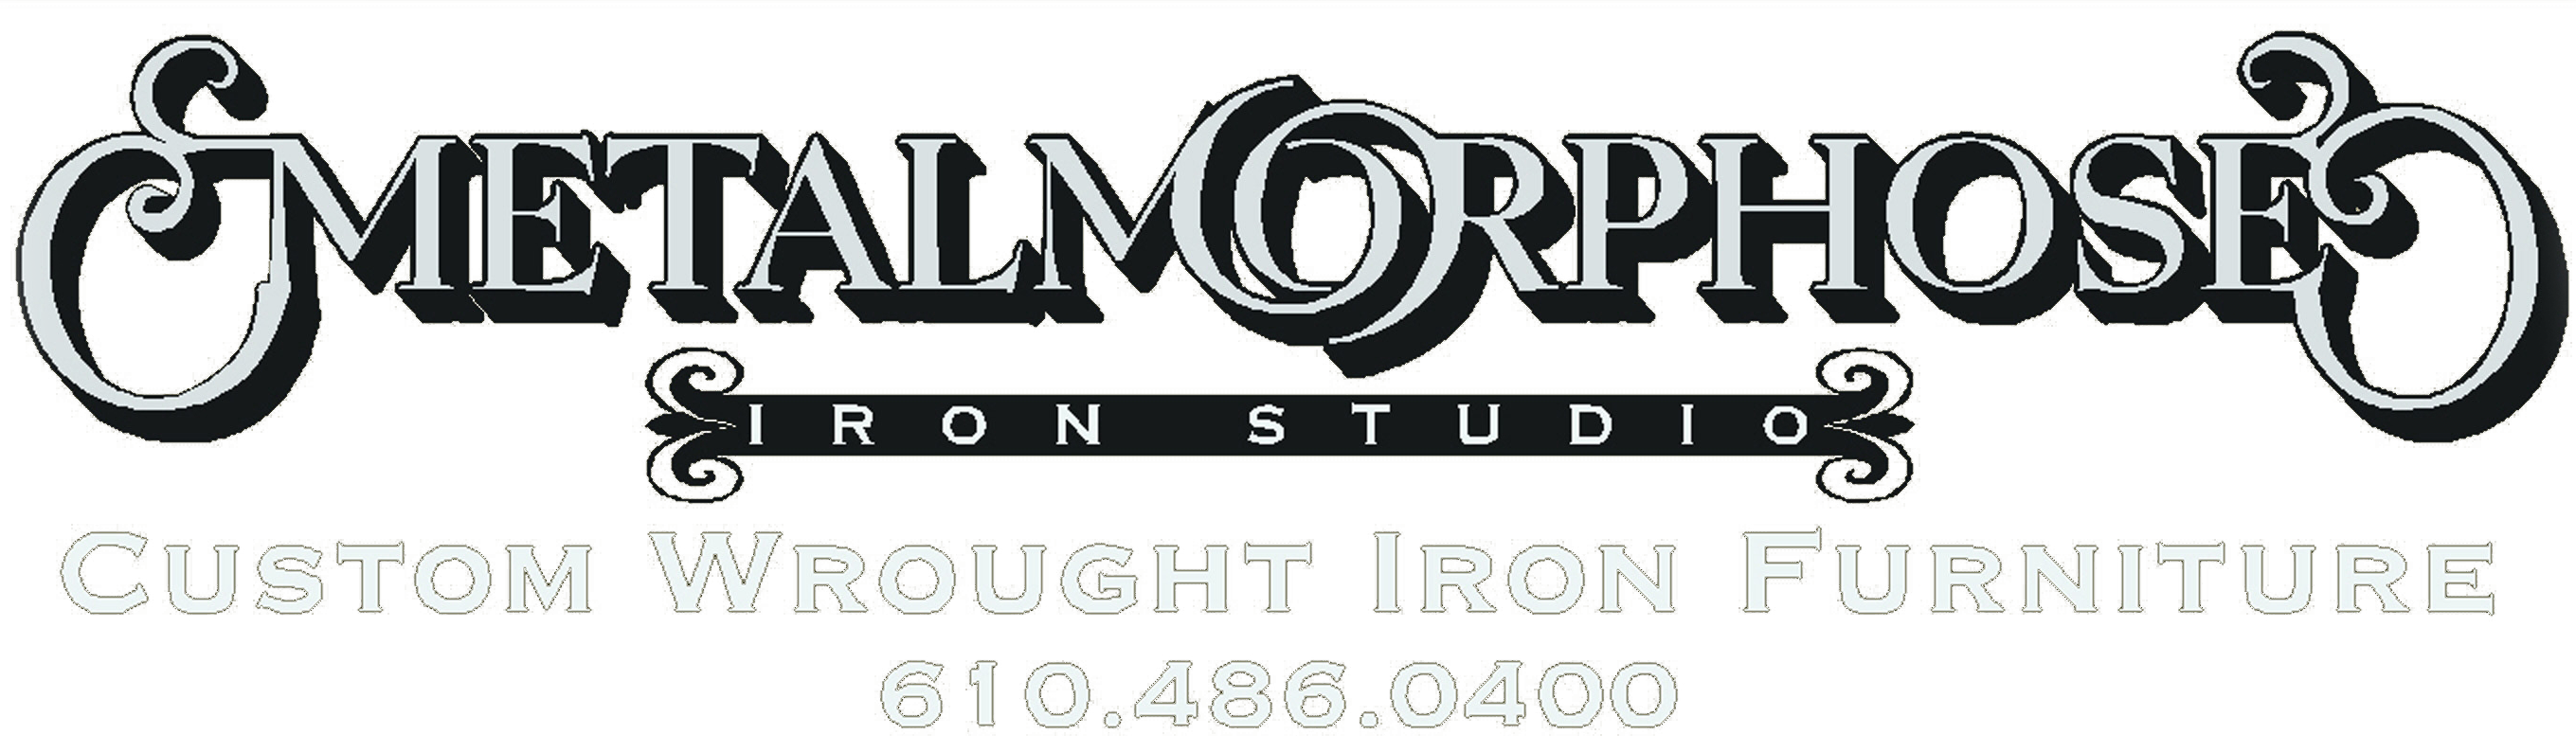 Metalmorphose Ironworks